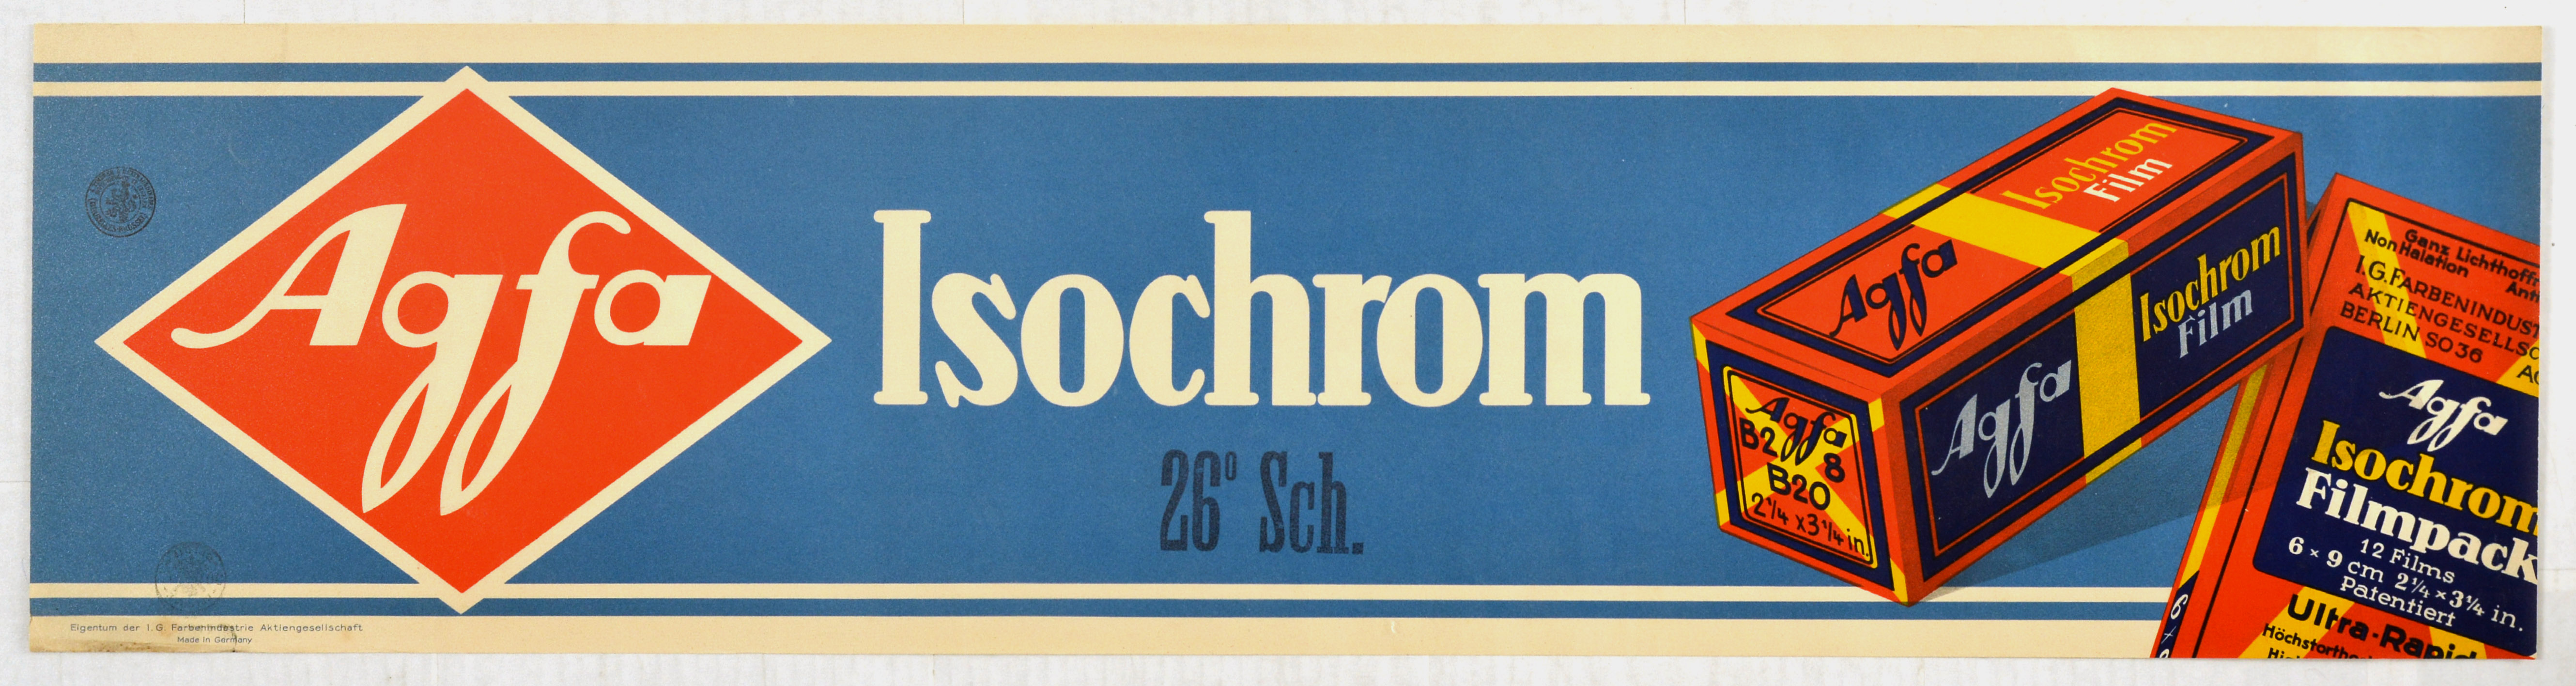 Advertising Poster Agfa Isochrom Photo Film Art Deco